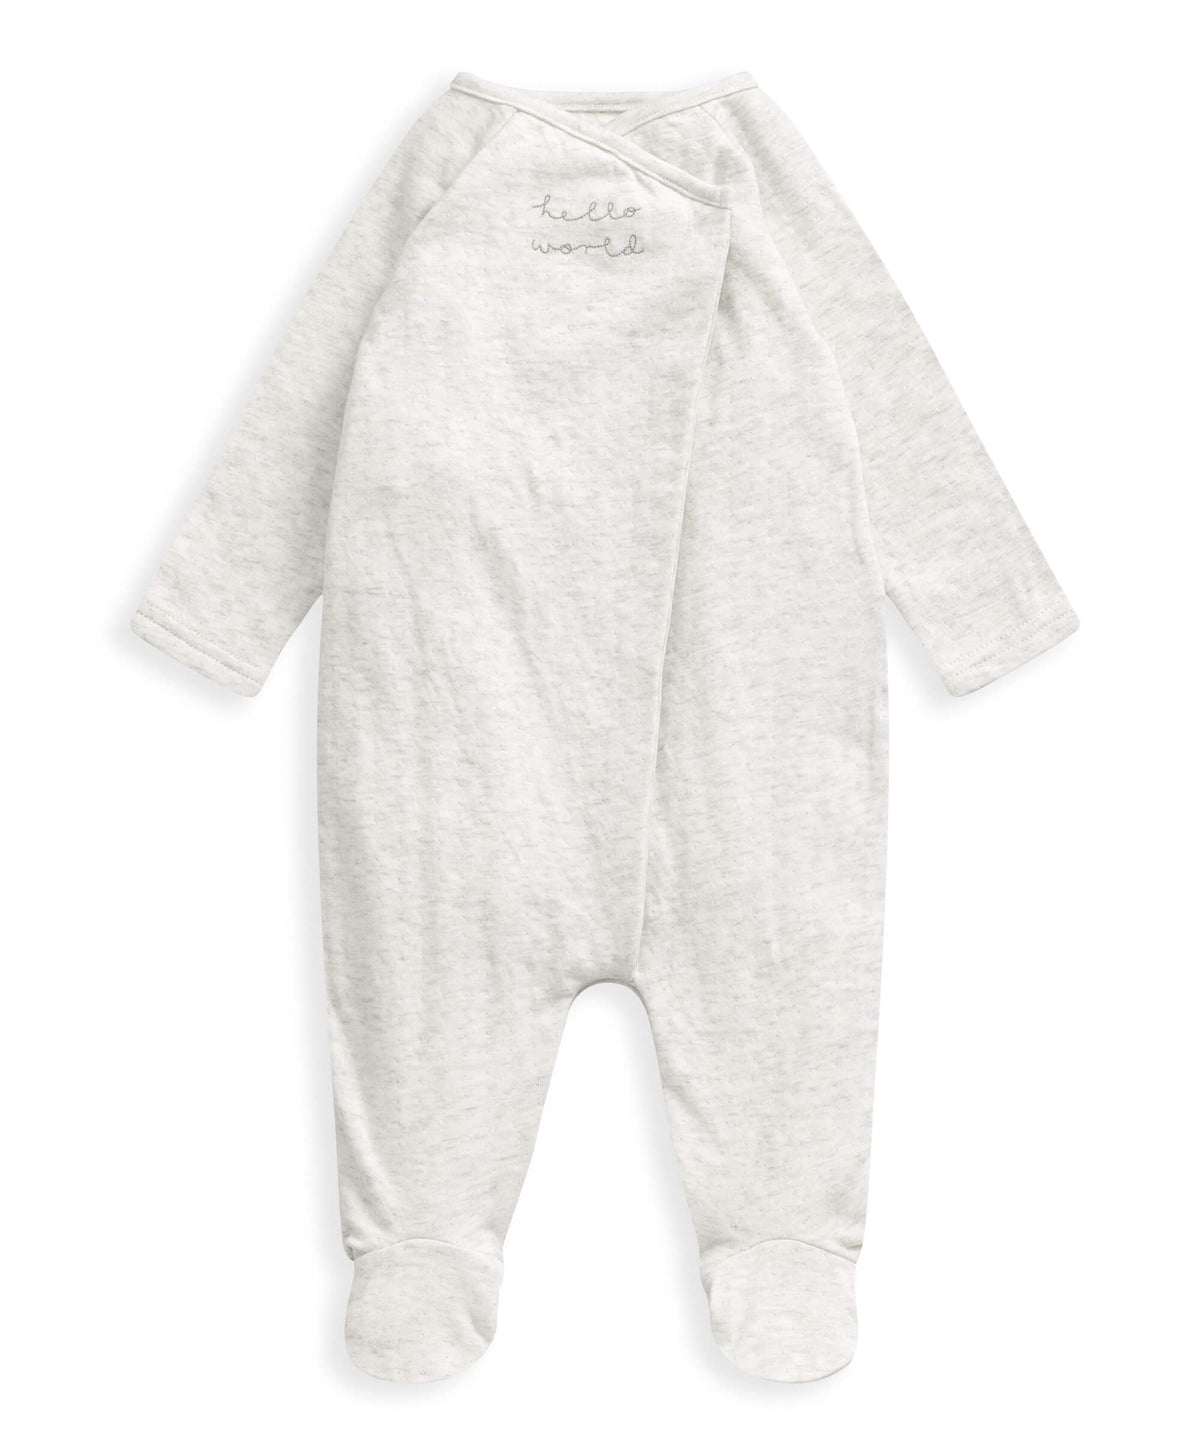 Hello World Embroidered Sleepsuit - Grey – Mamas & Papas UK